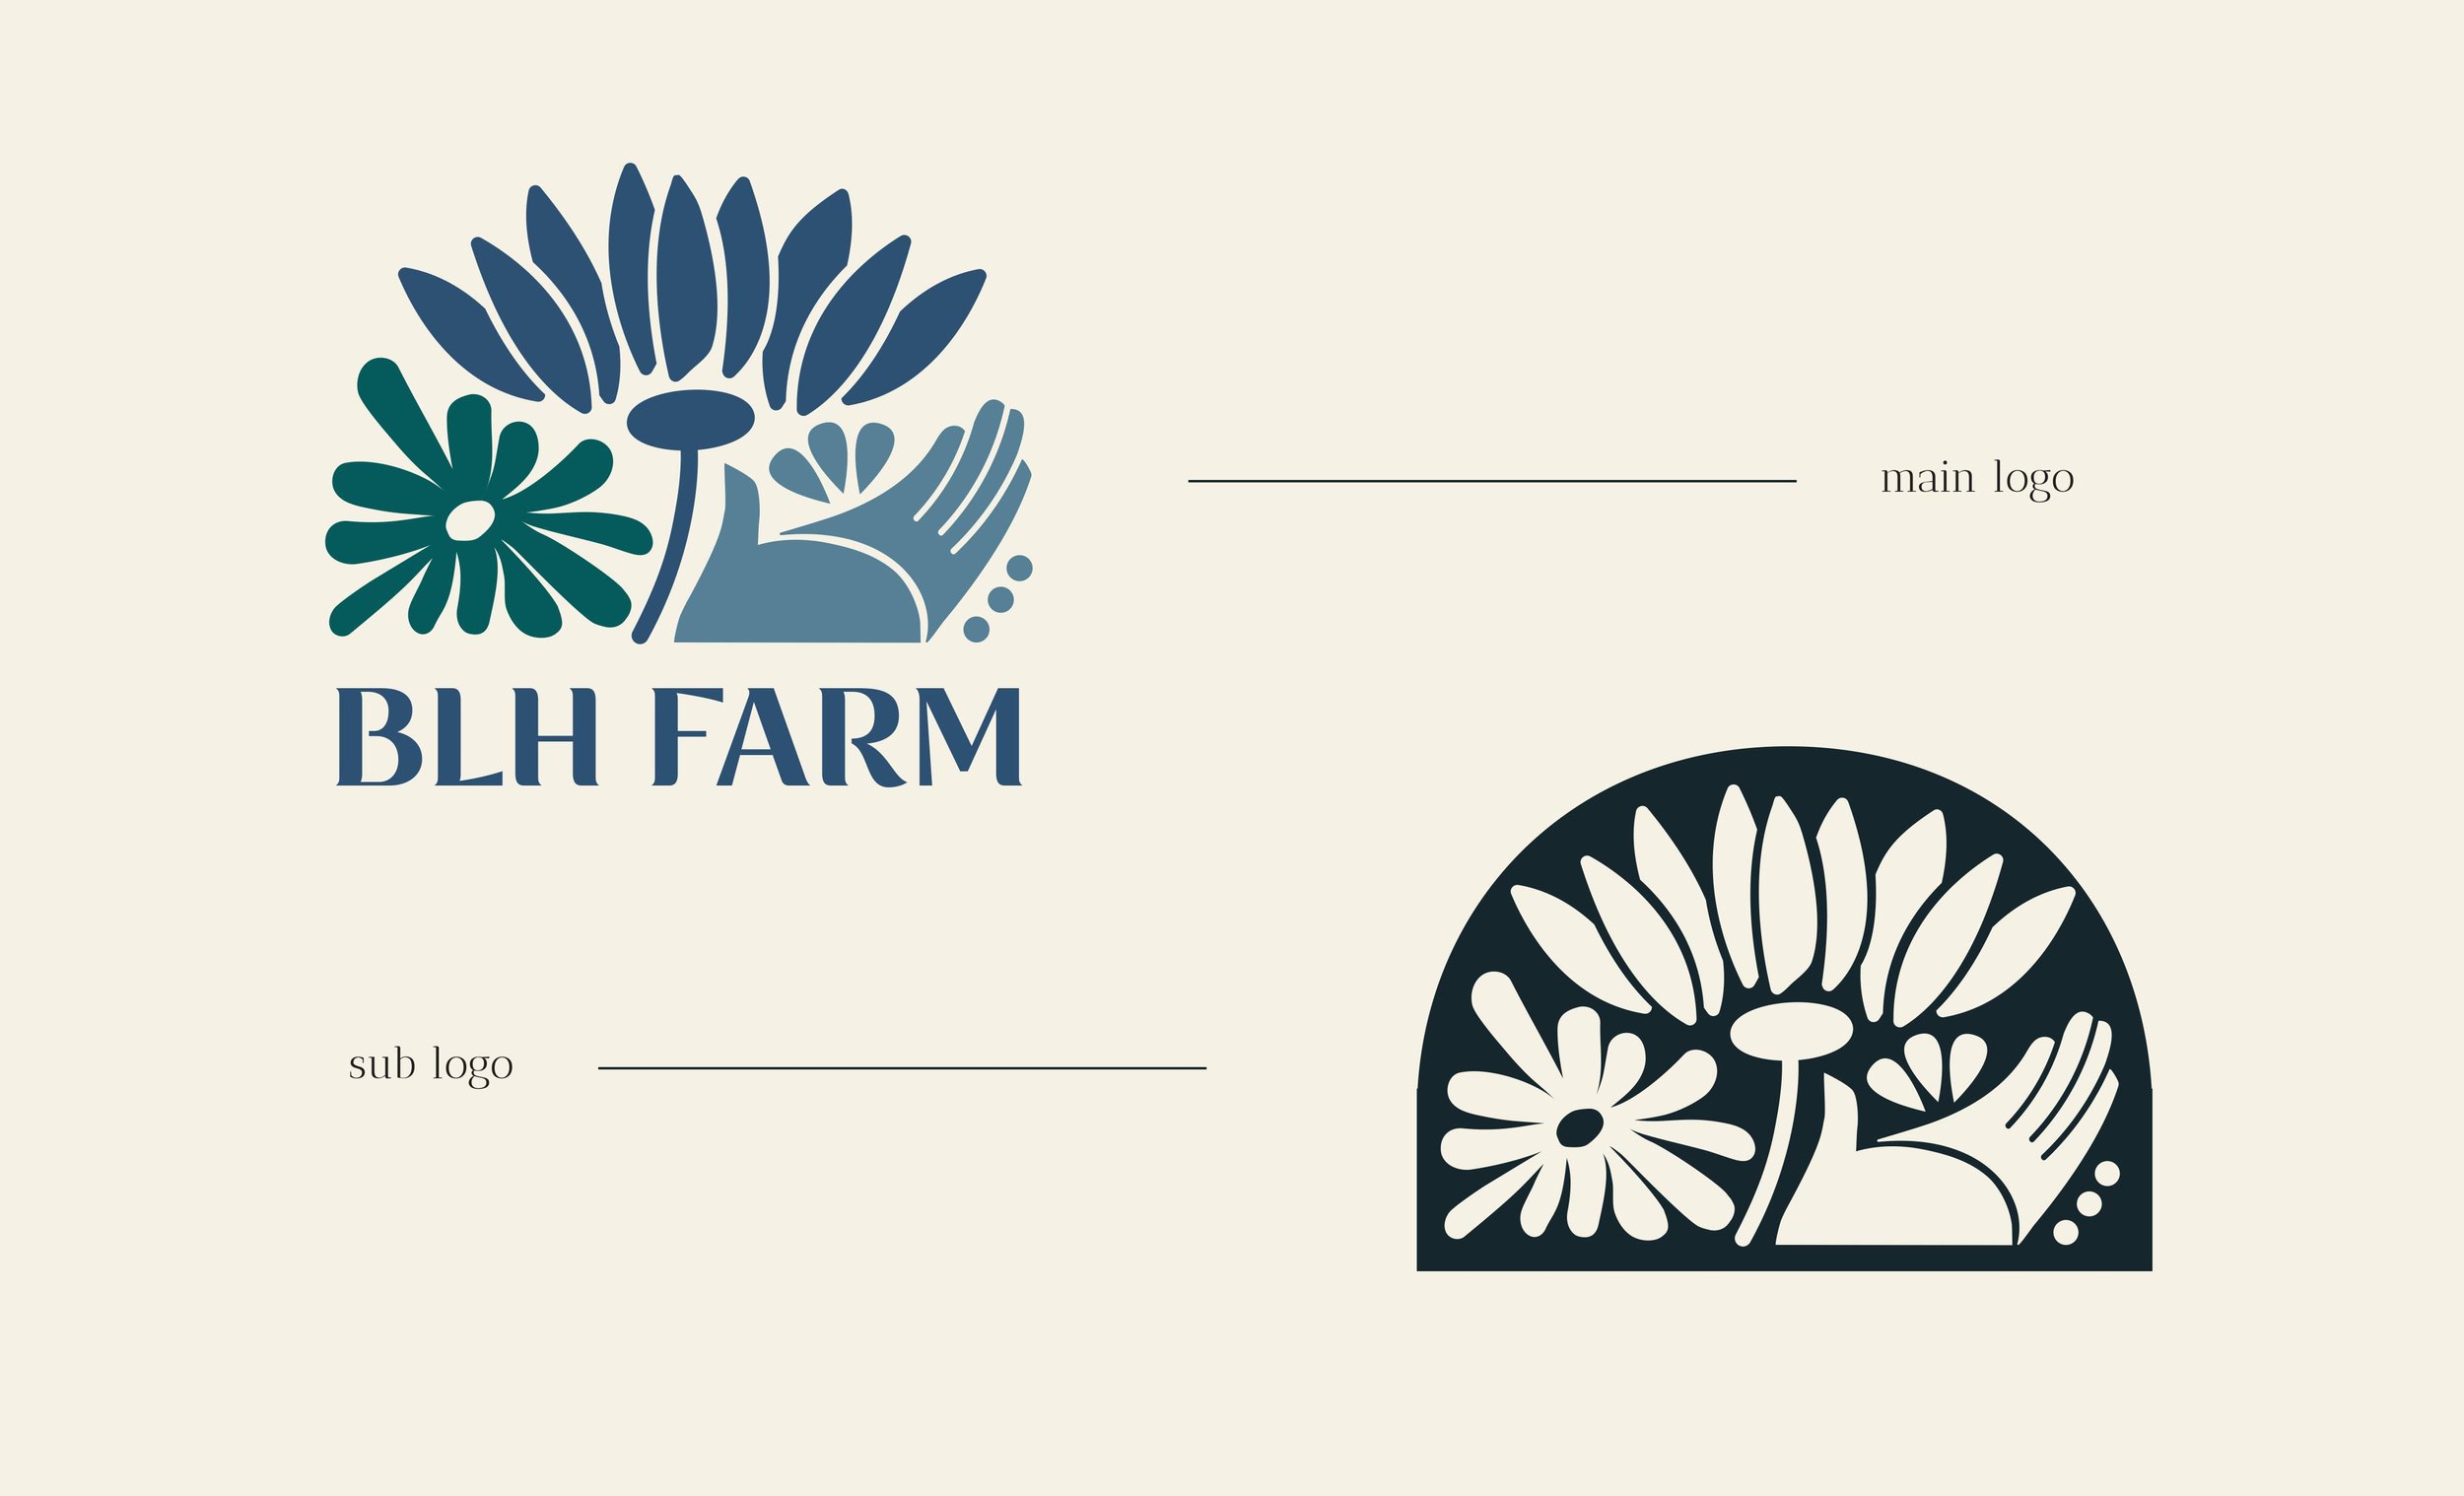  BLH farm logo and sublogo. 